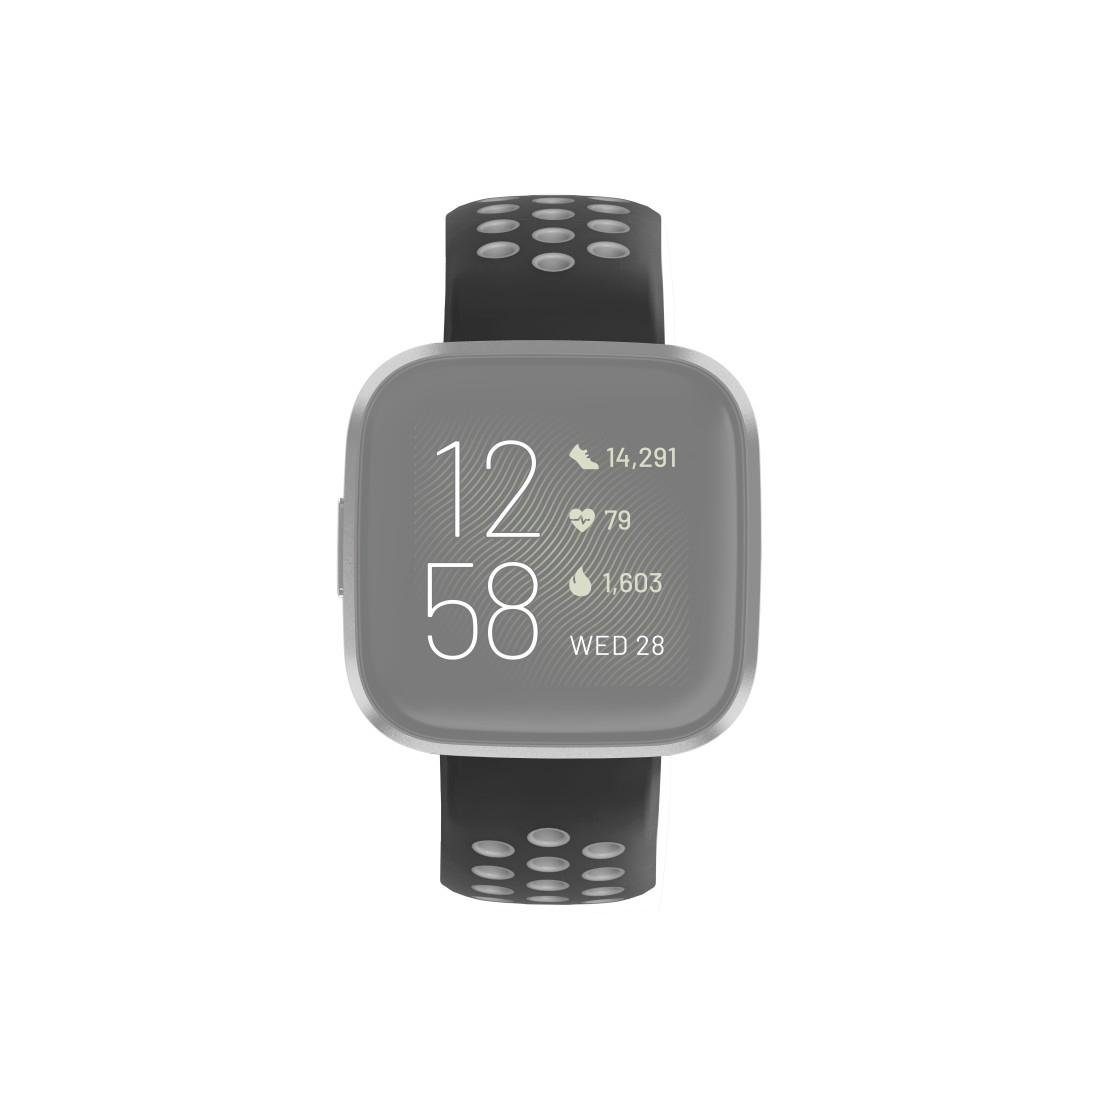 Smartwatch-Armband Ersatzarmband Hama atmungsaktives Fitbit 22mm schwarz 2/Versa/Versa Lite, Versa